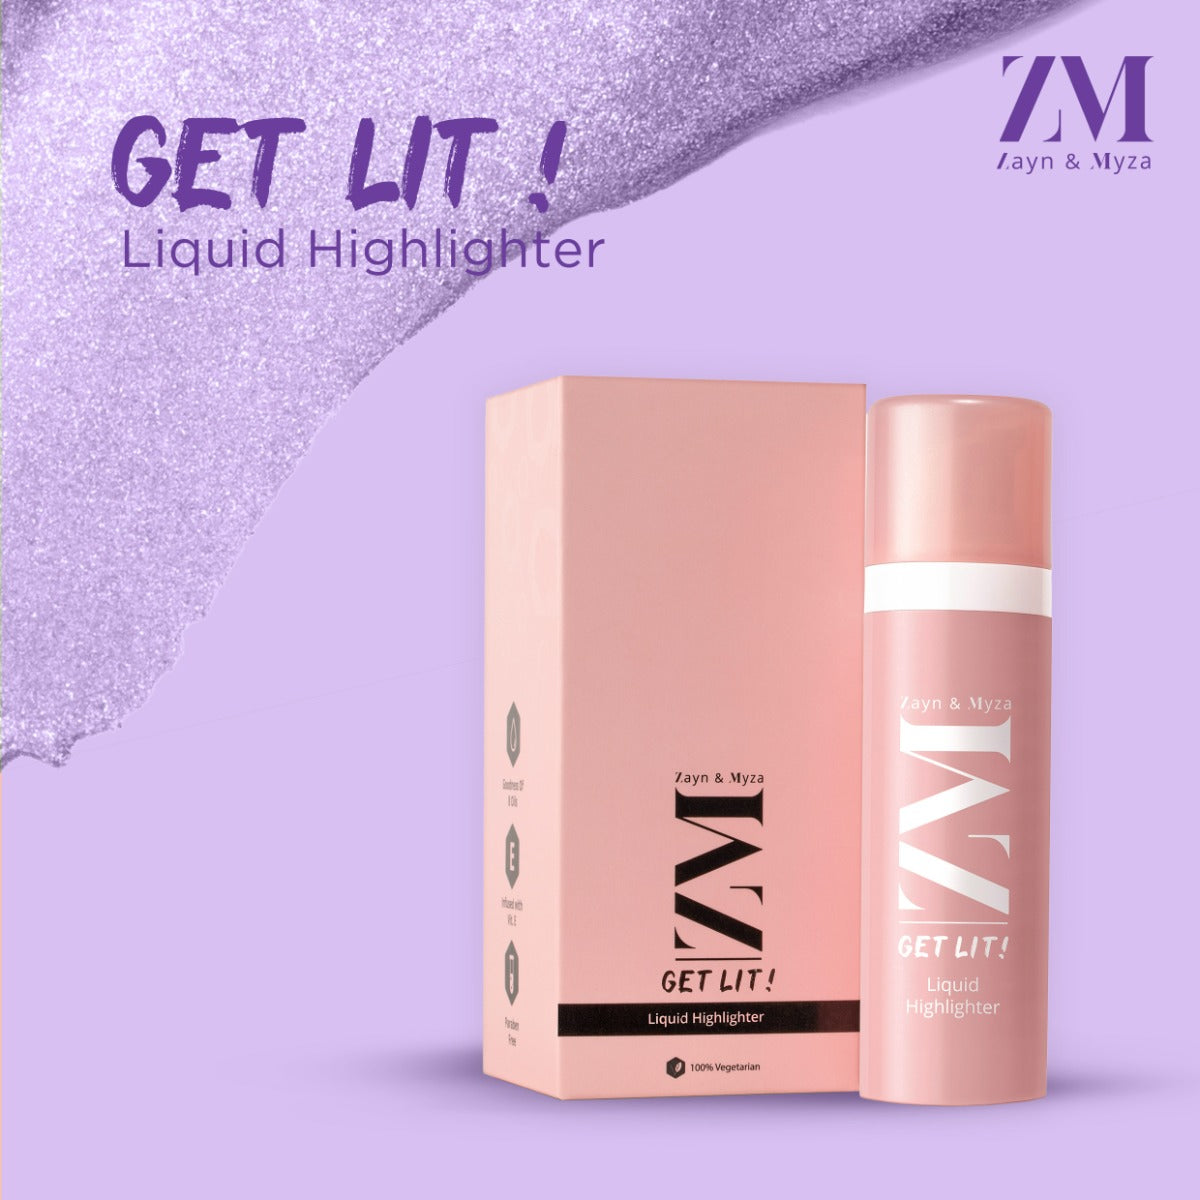 Zayn &amp; Myza Get Lit! Liquid Highlighter (30g)